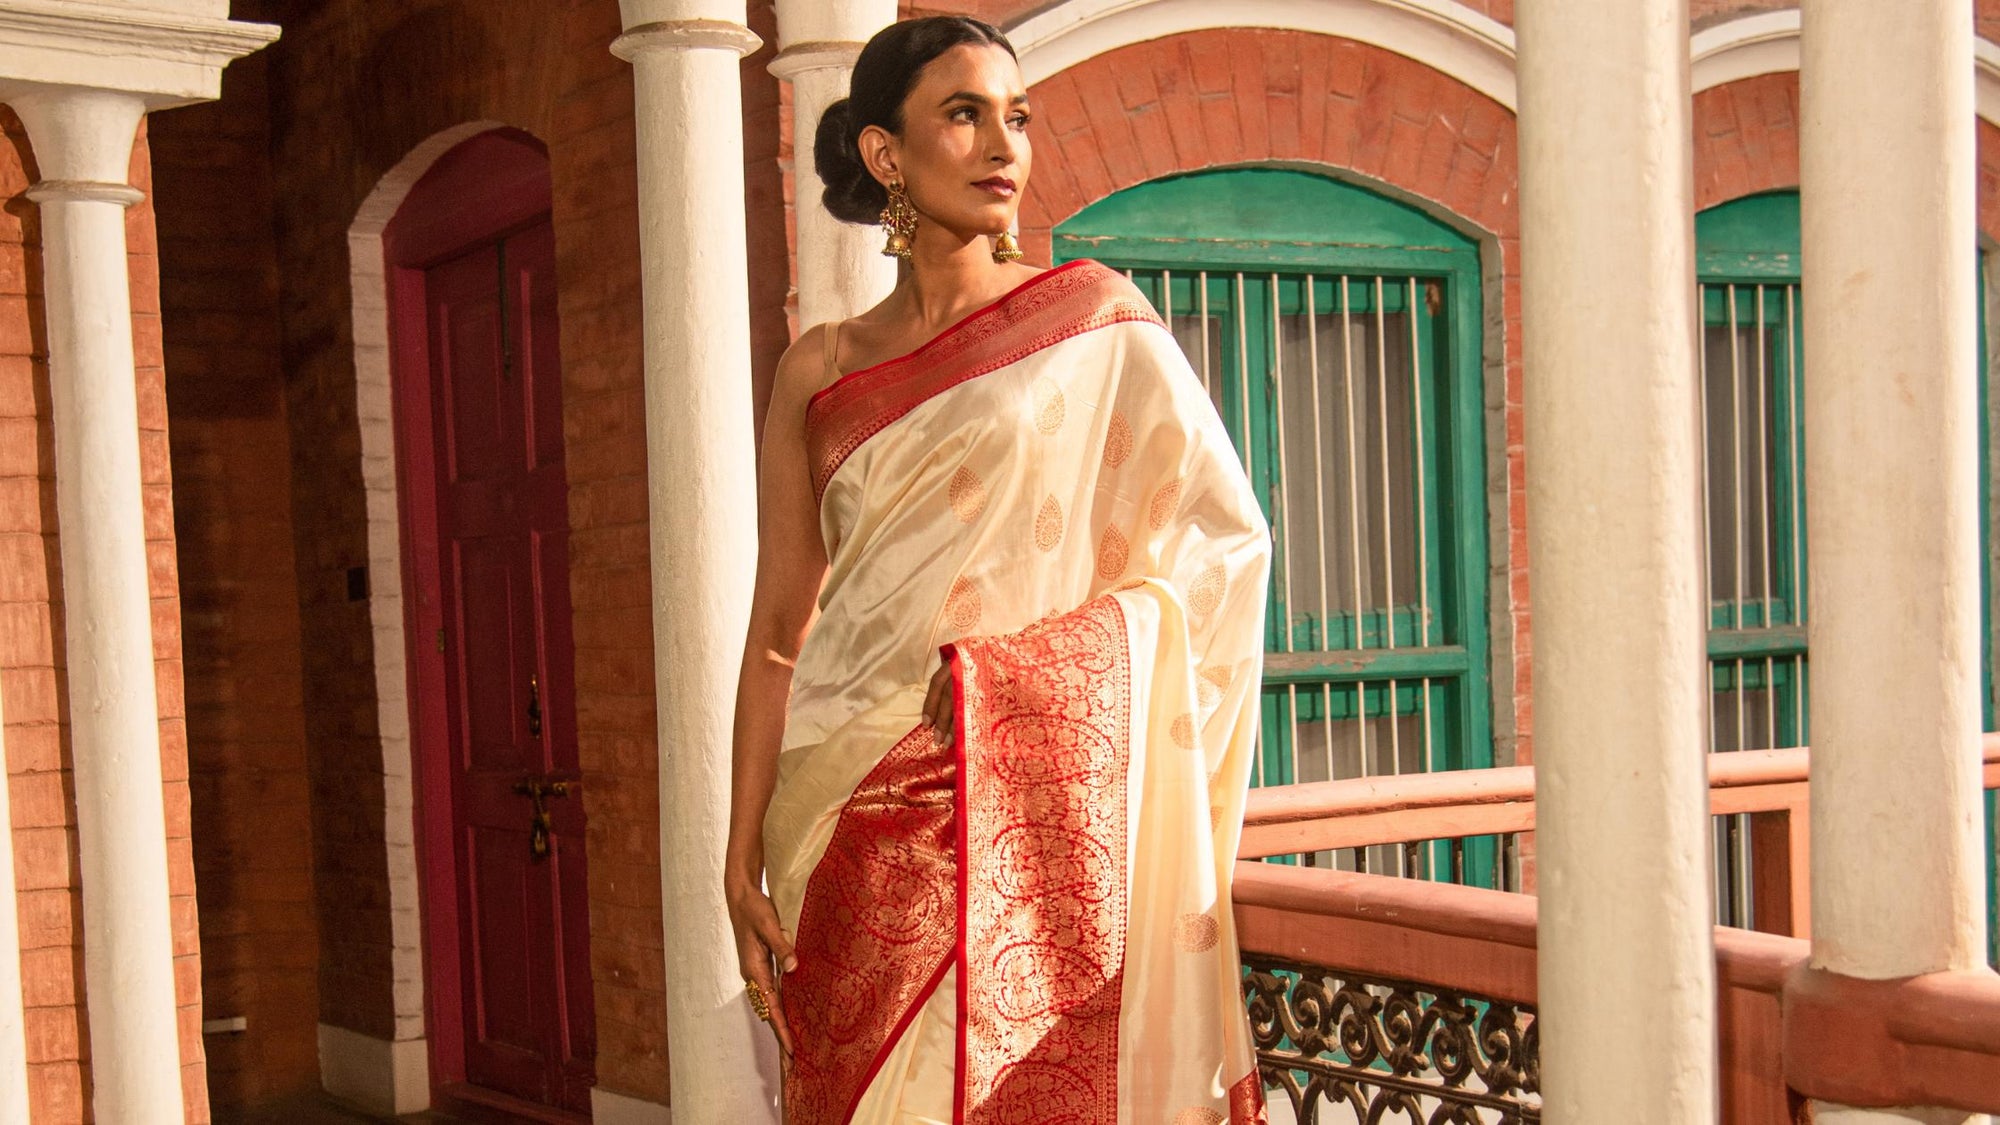 How to perfectly drape a Banarasi sari | The Times of India